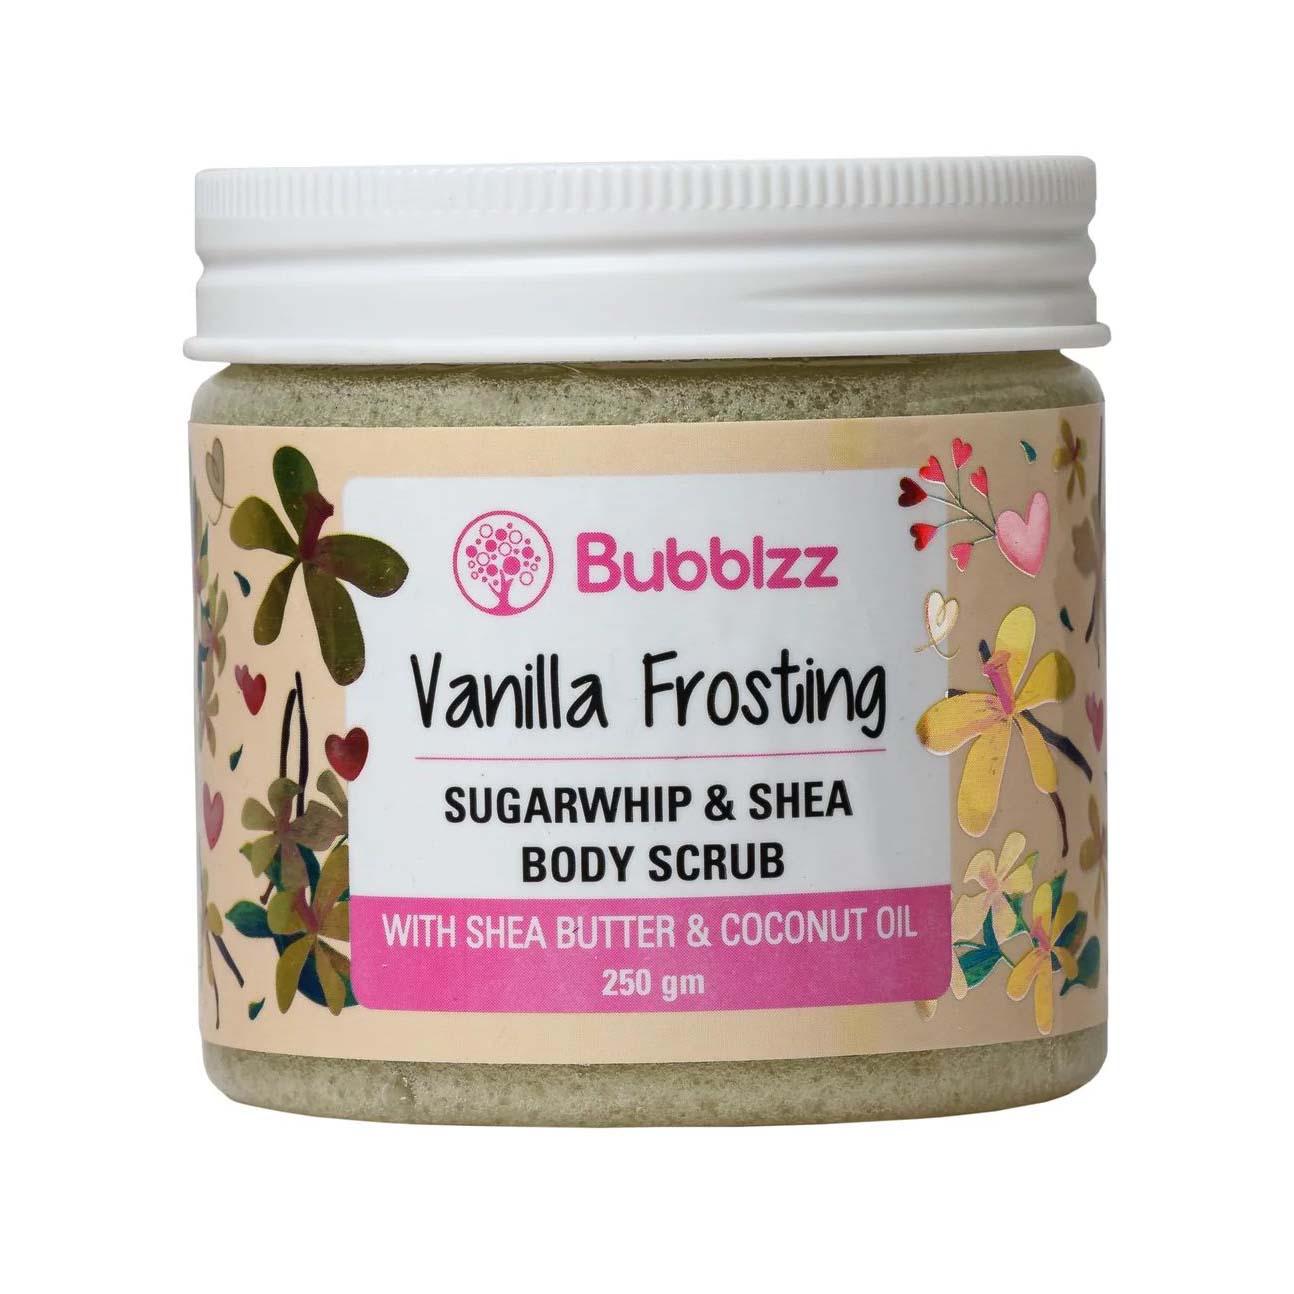 Bubblzz Vanilla Frosting Sugar Whip & Shea Body Scrub – 250gm